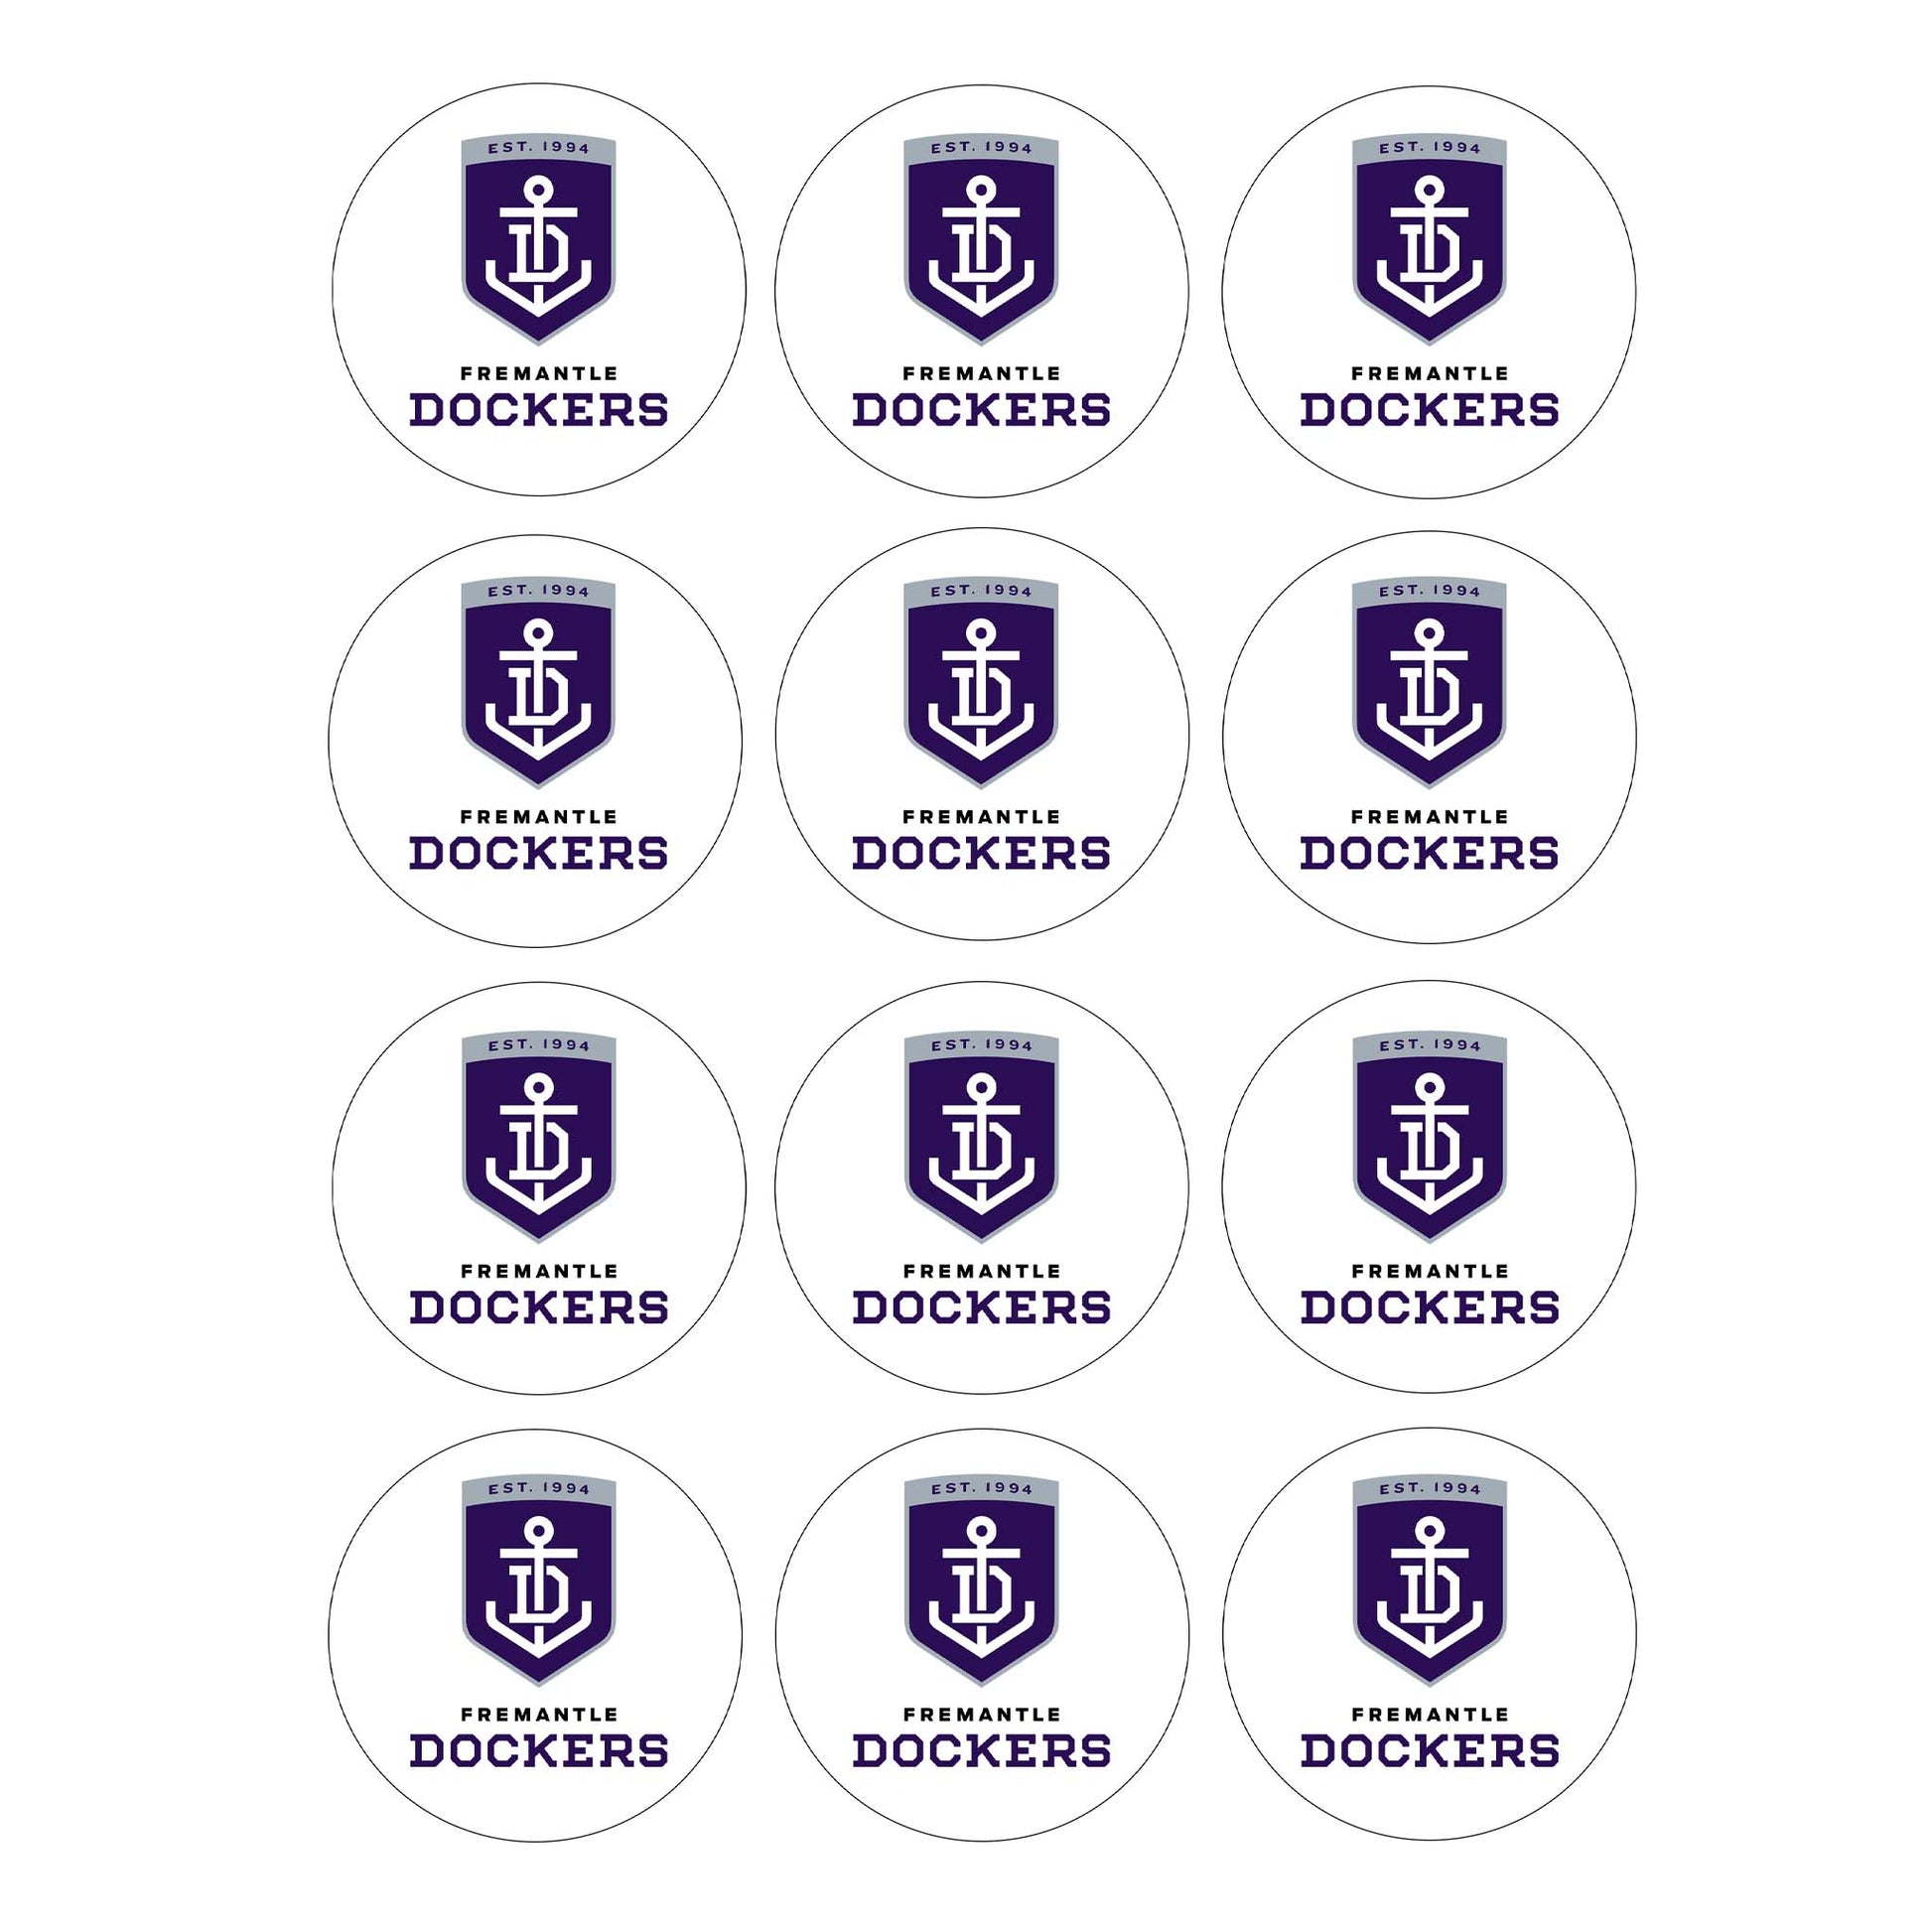 Fremantle Dockers AFL Club - Edible Icing Images